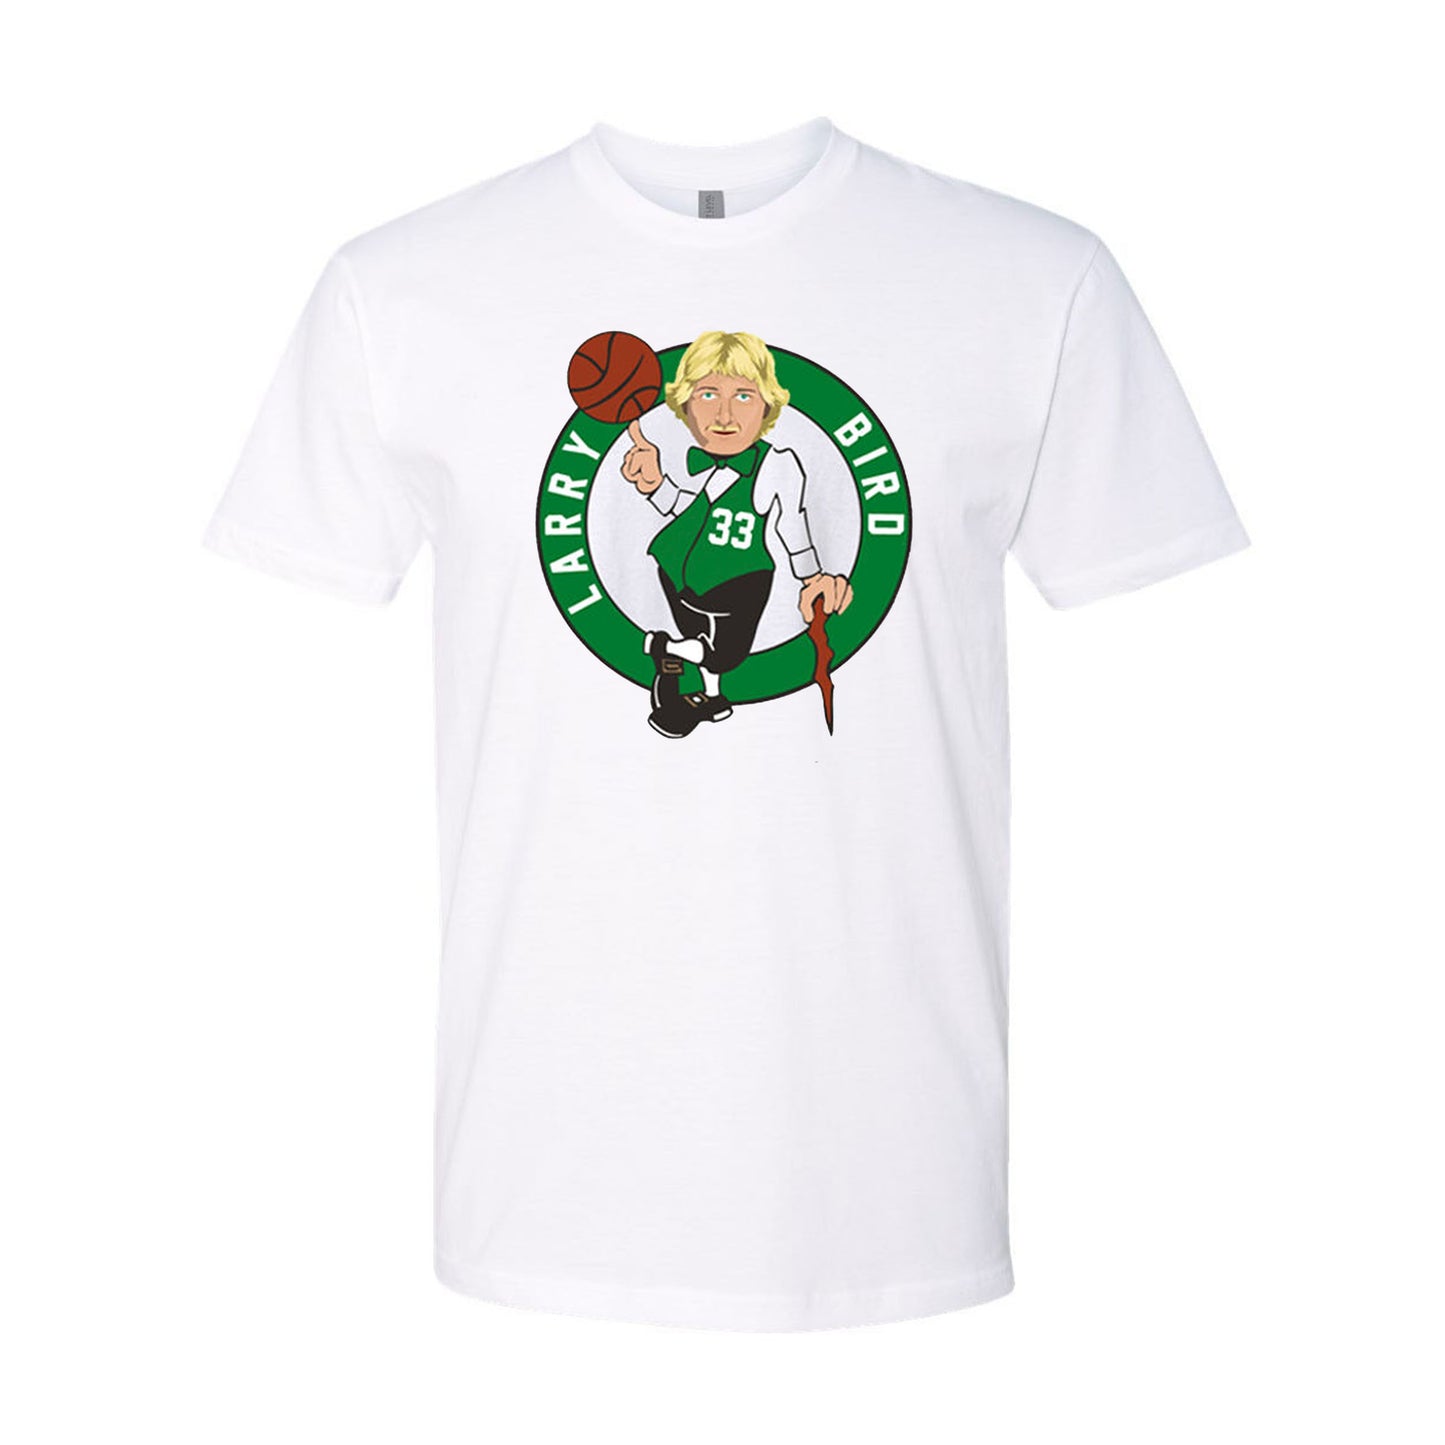 Boston Larry Bird Logo Graphic Shirt For Boston Basketball Team